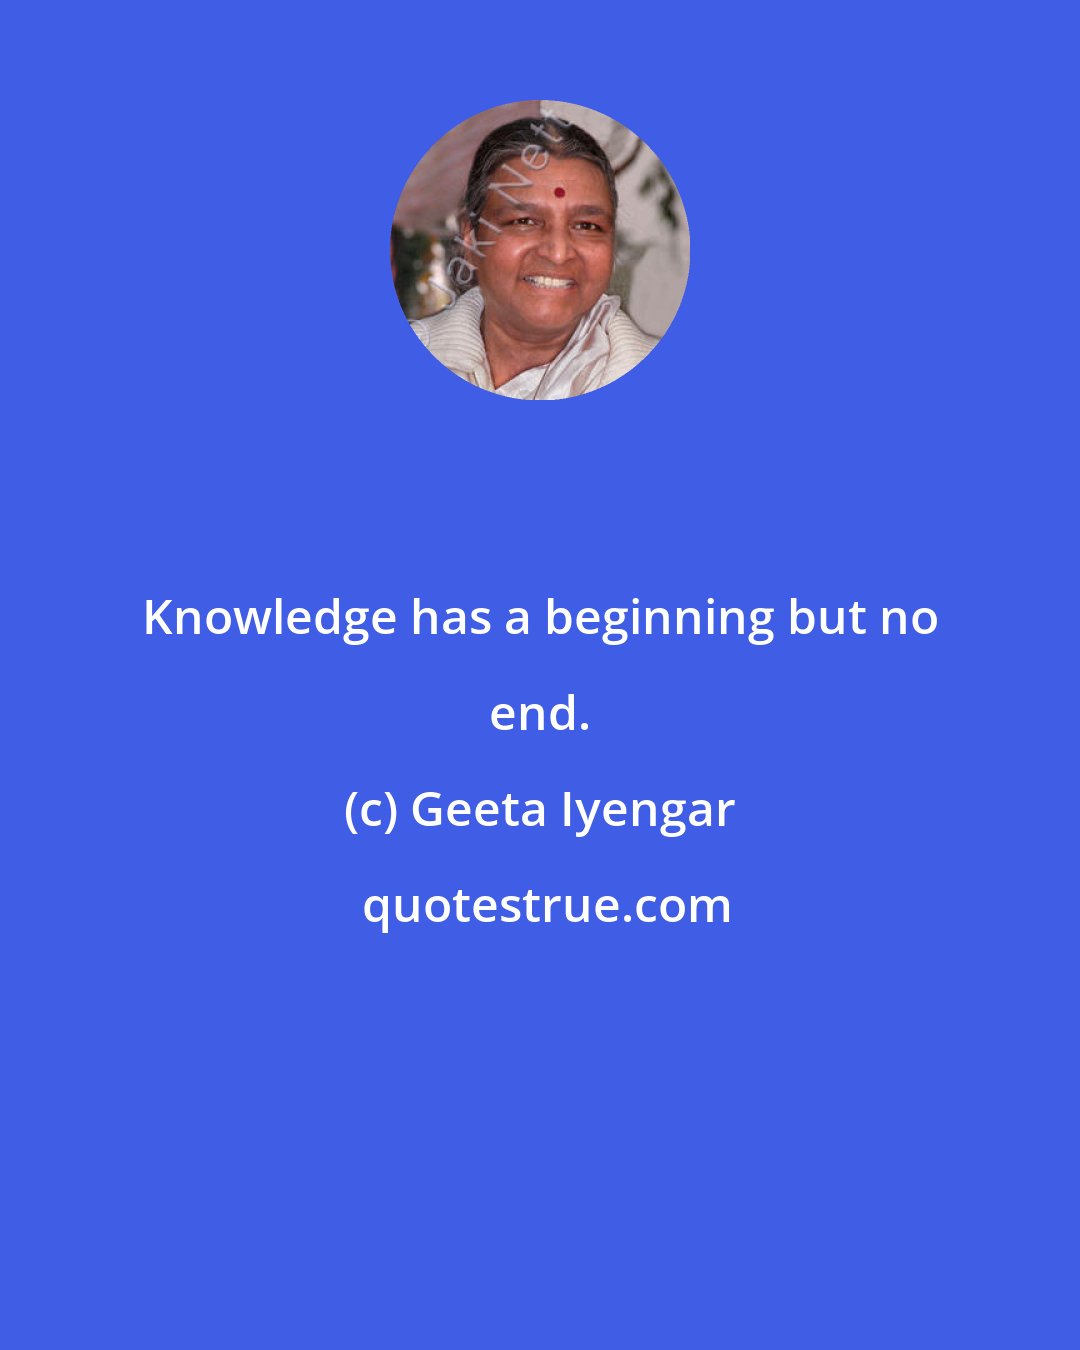 Geeta Iyengar: Knowledge has a beginning but no end.